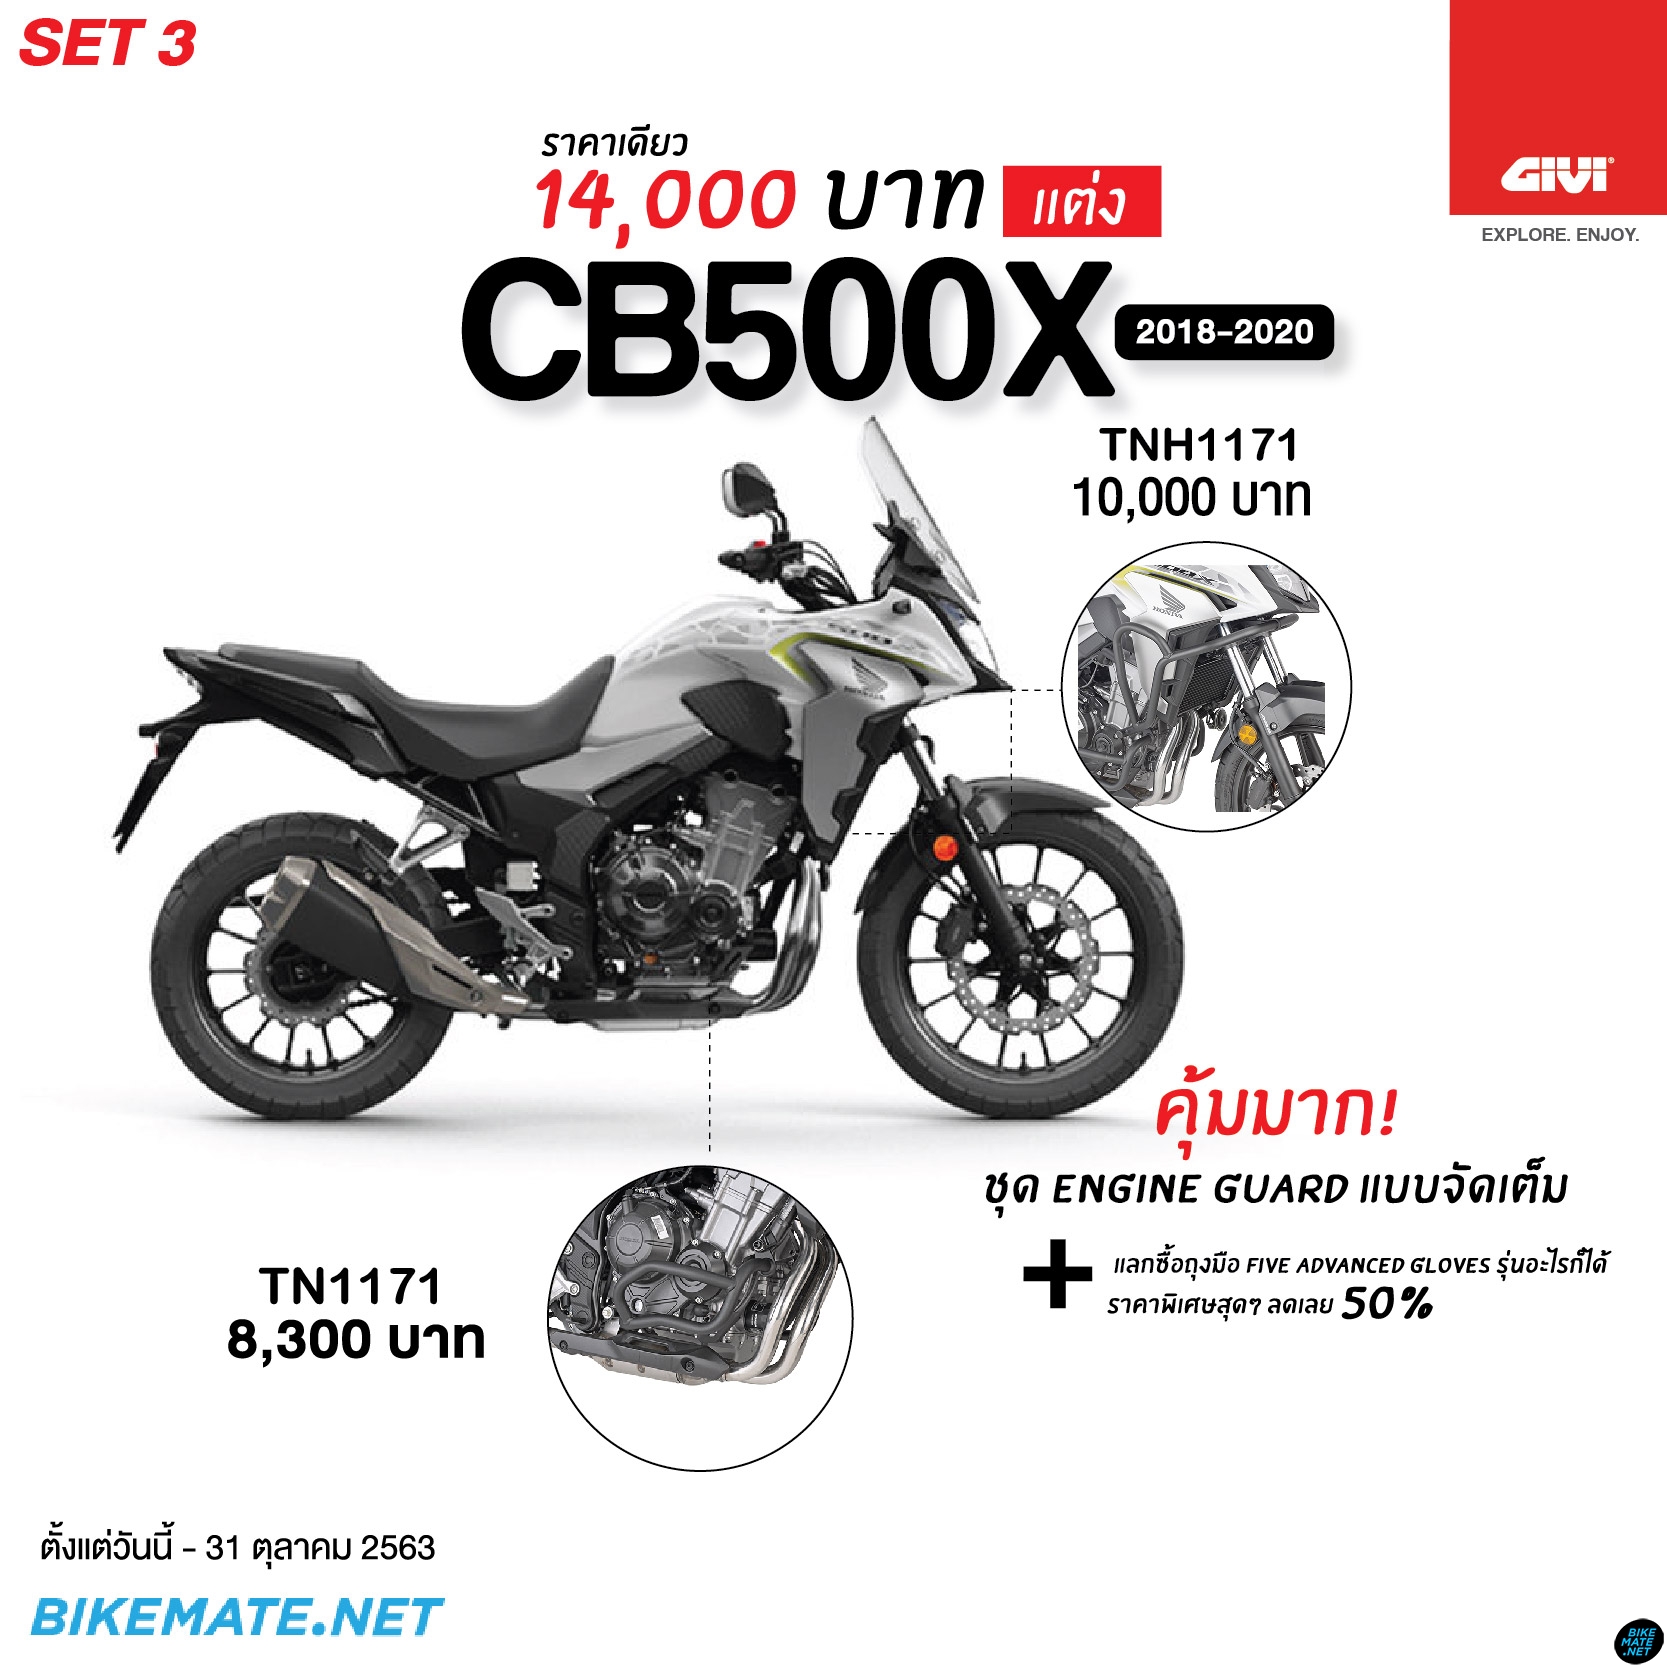 GIVI Honda CB500X Combo Set 3 – ชุดอุปกรณ์แต่งรถมอเตอร์ไซค์ Honda CB500X (2018-2020)